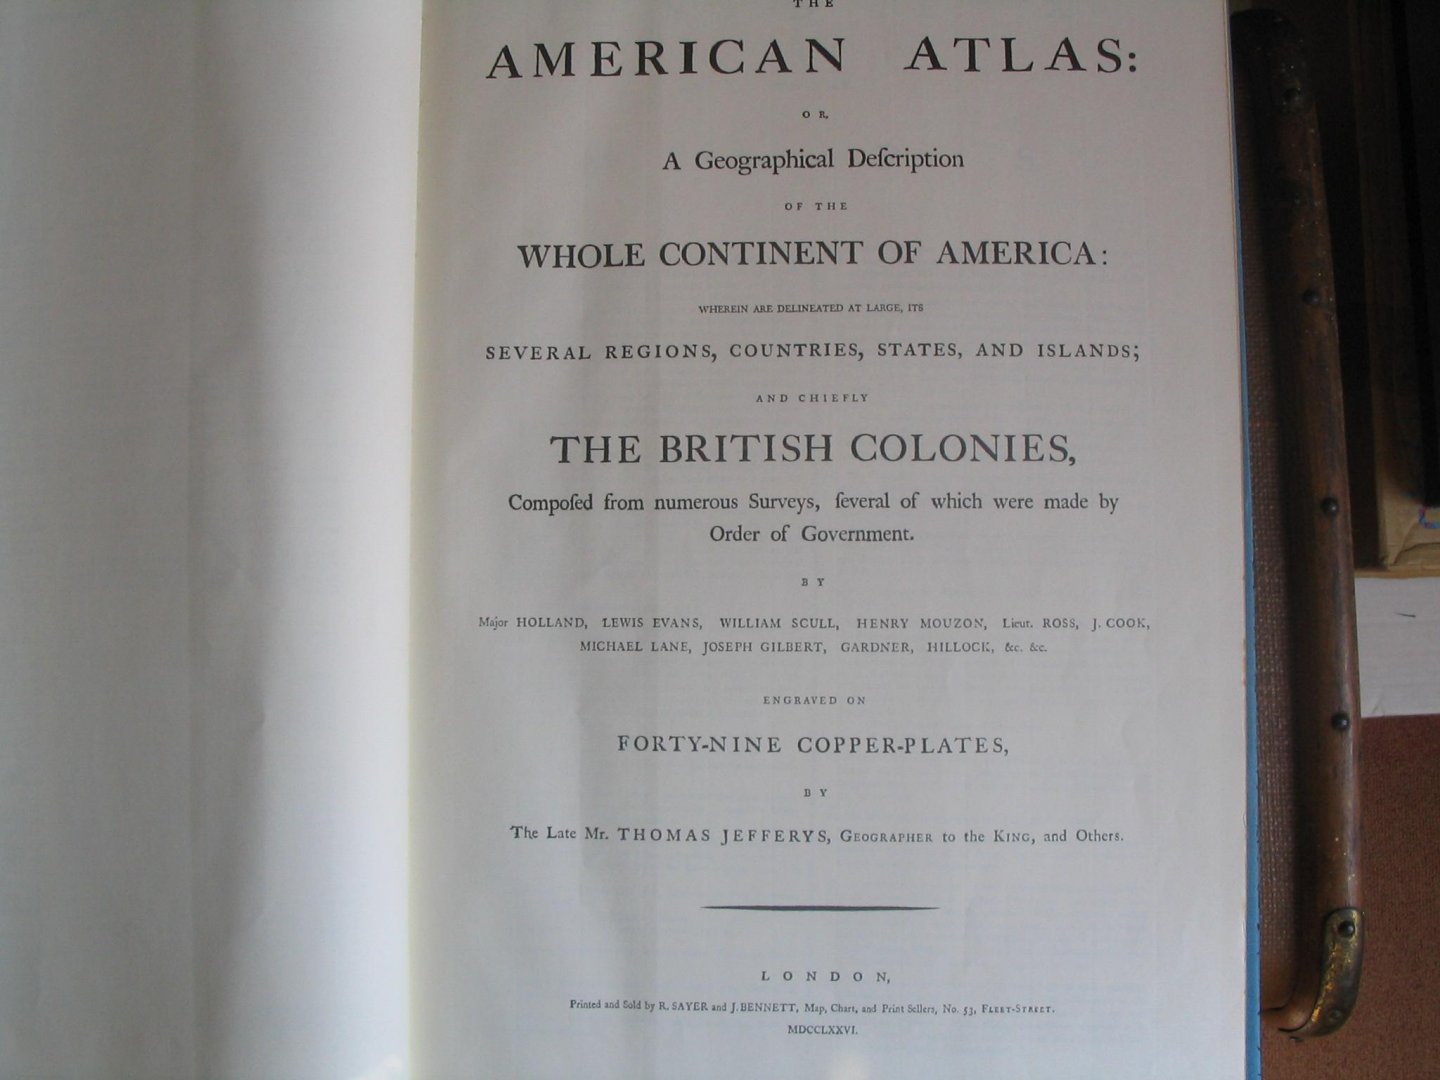 Jefferys, Thomas. Introduction by Walter W. Ristow - The American Atlas, London 1776